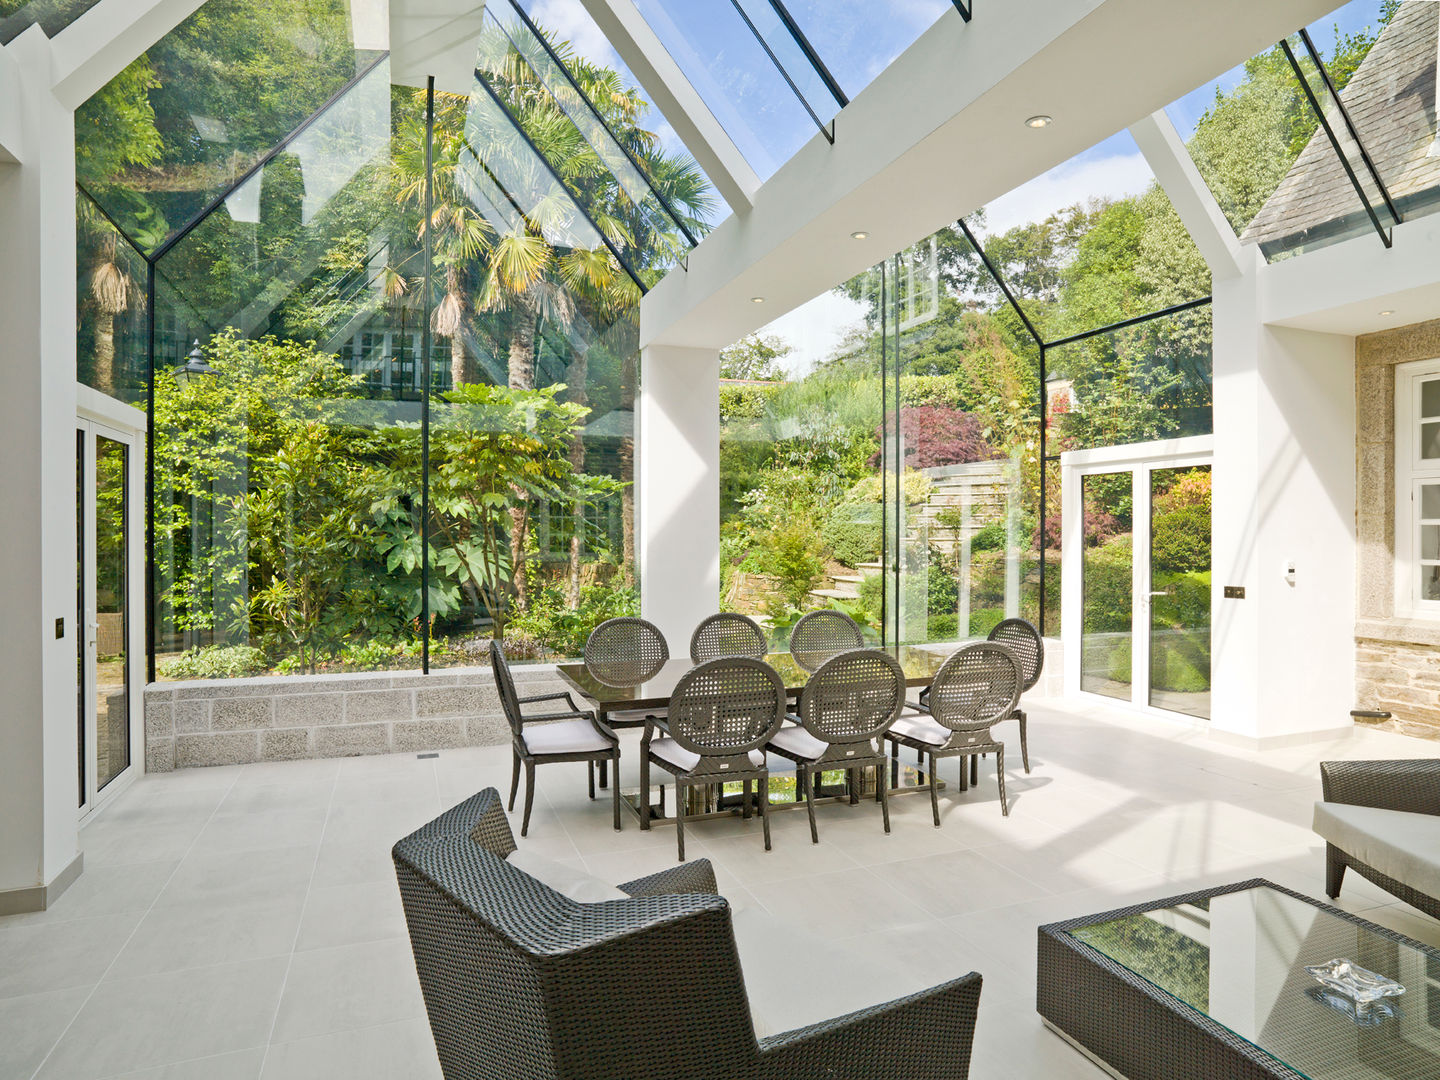 Structural Glass Conservatory, Cornwall homify بيت زجاجي زجاج